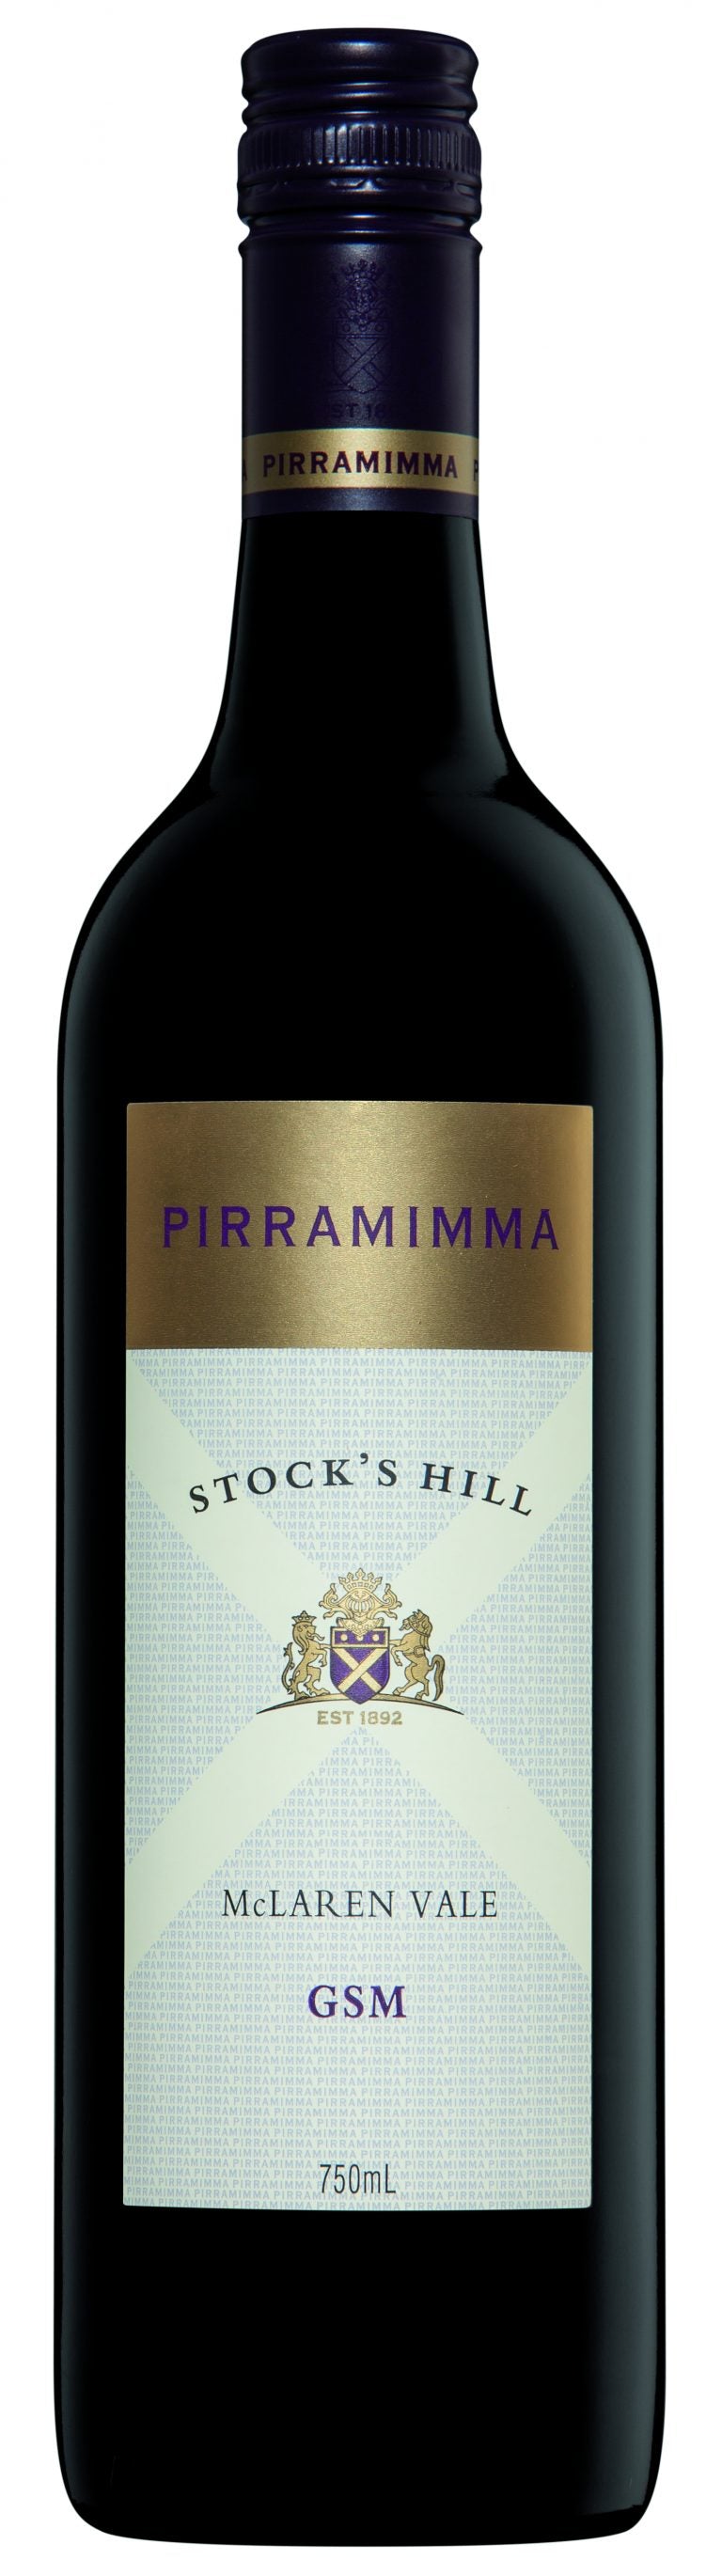 Pirramimma Stock's Hill GSM 750ml